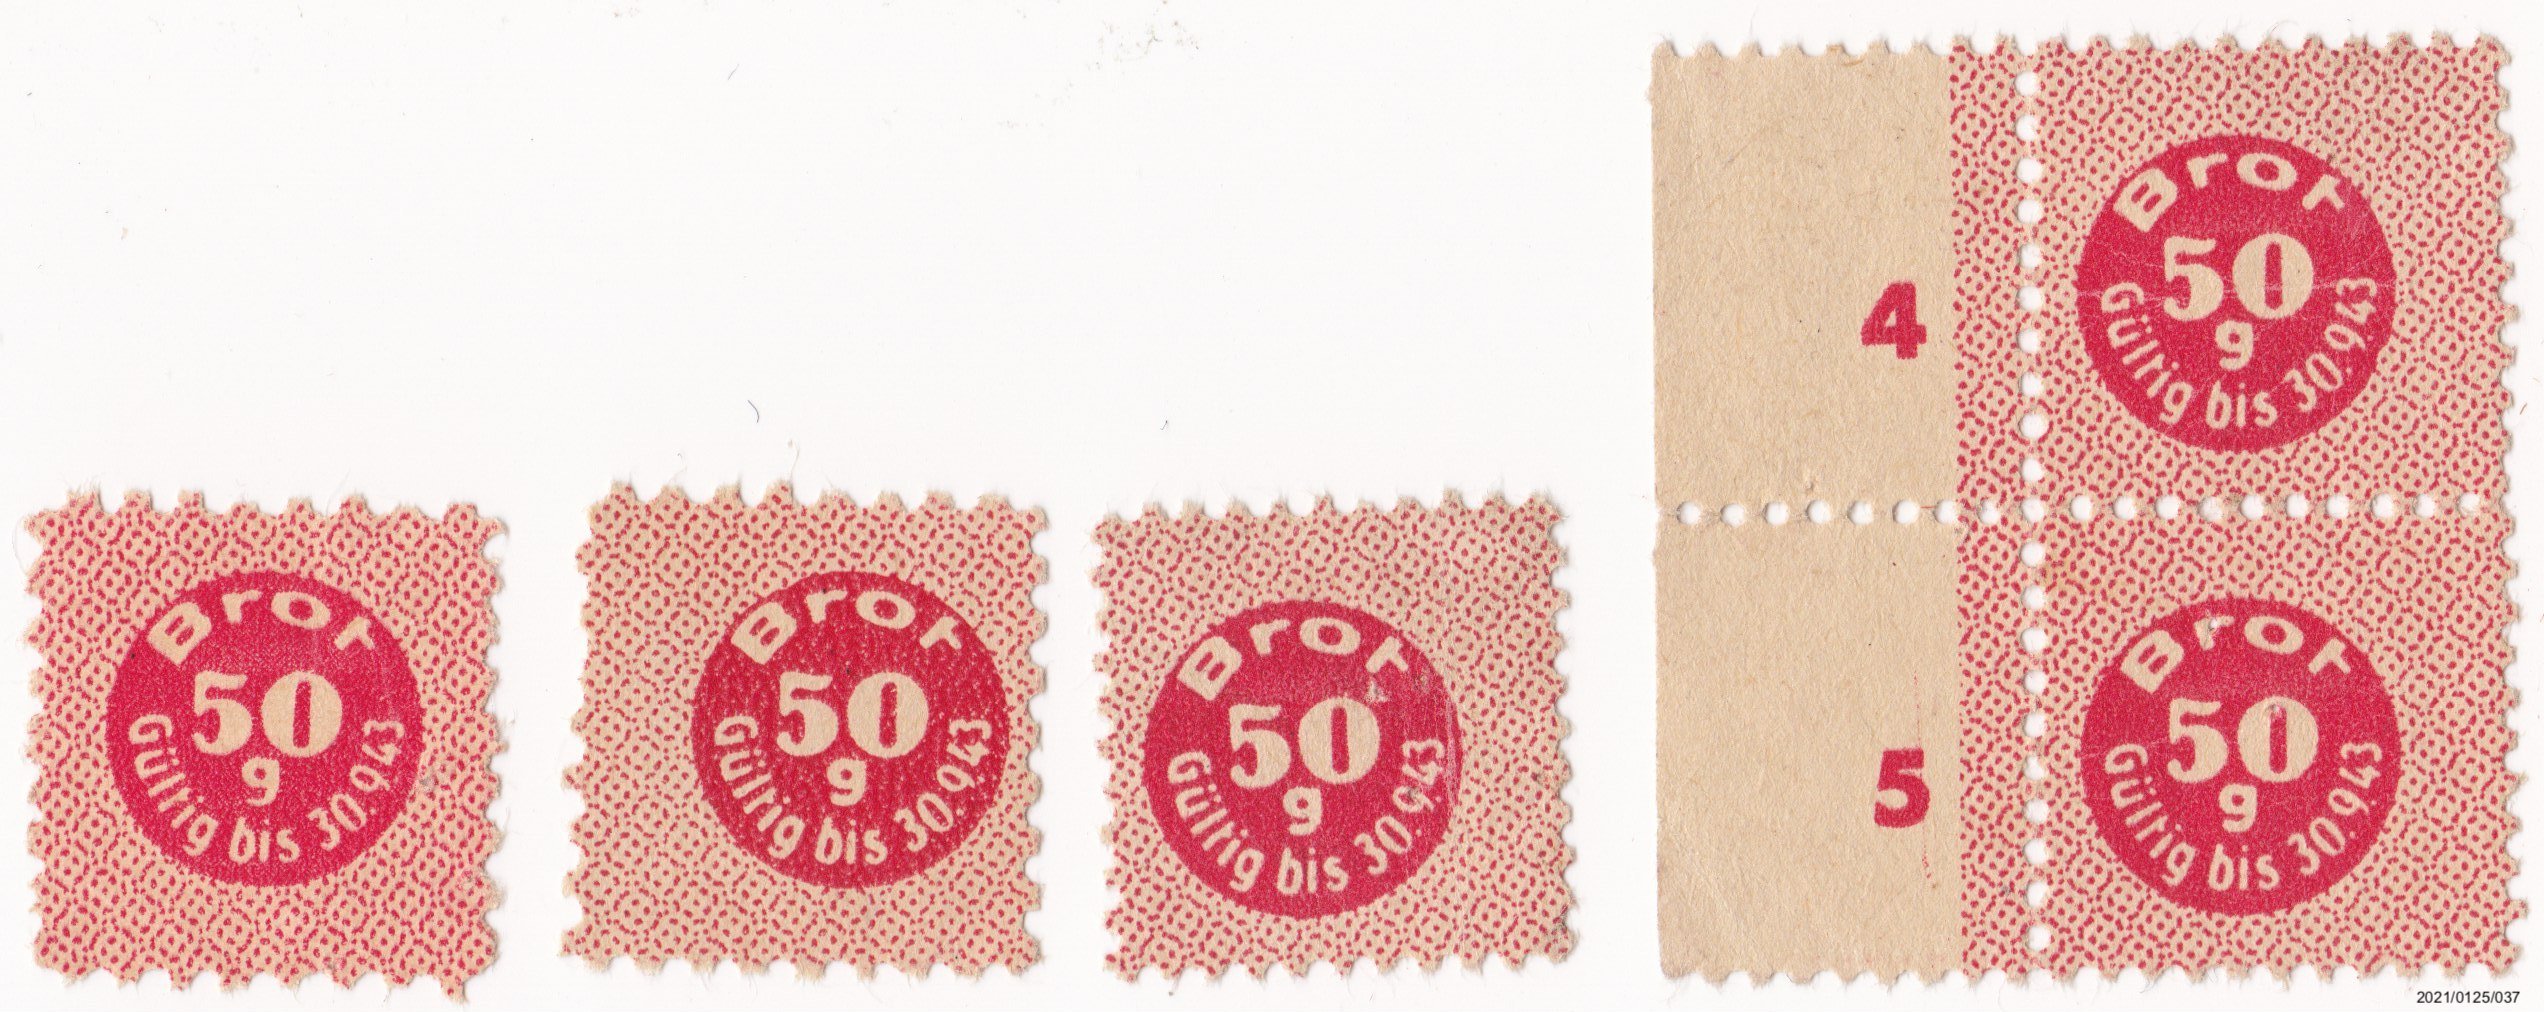 Lebenmittelmarke für 50g Brot 1943 (Museumsgesellschaft Bad Dürkheim e. V. CC BY-NC-SA)